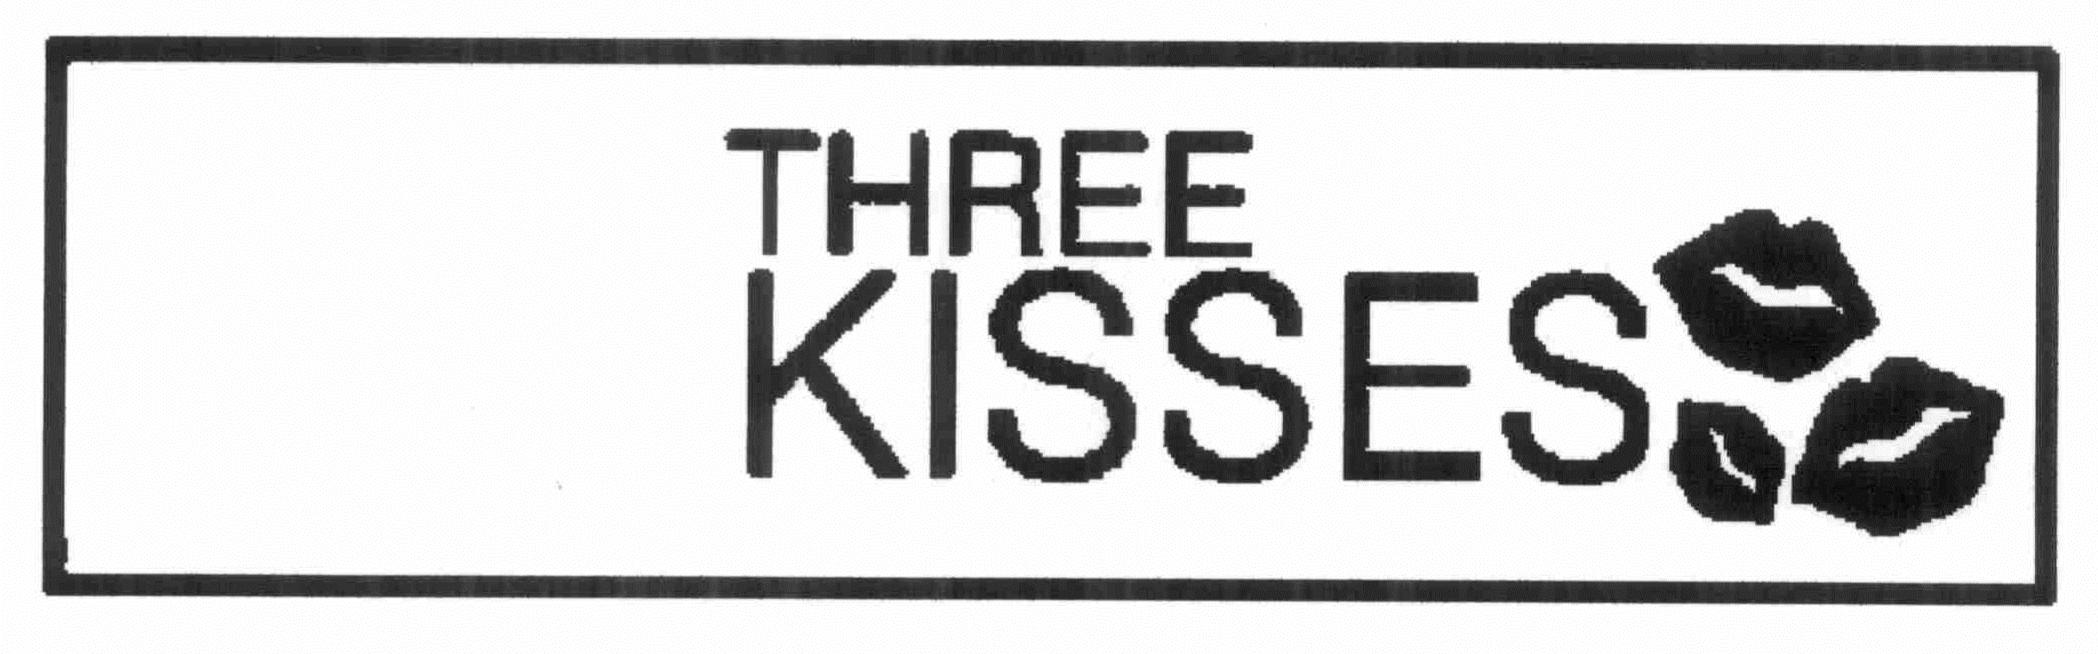 THREE KISSES